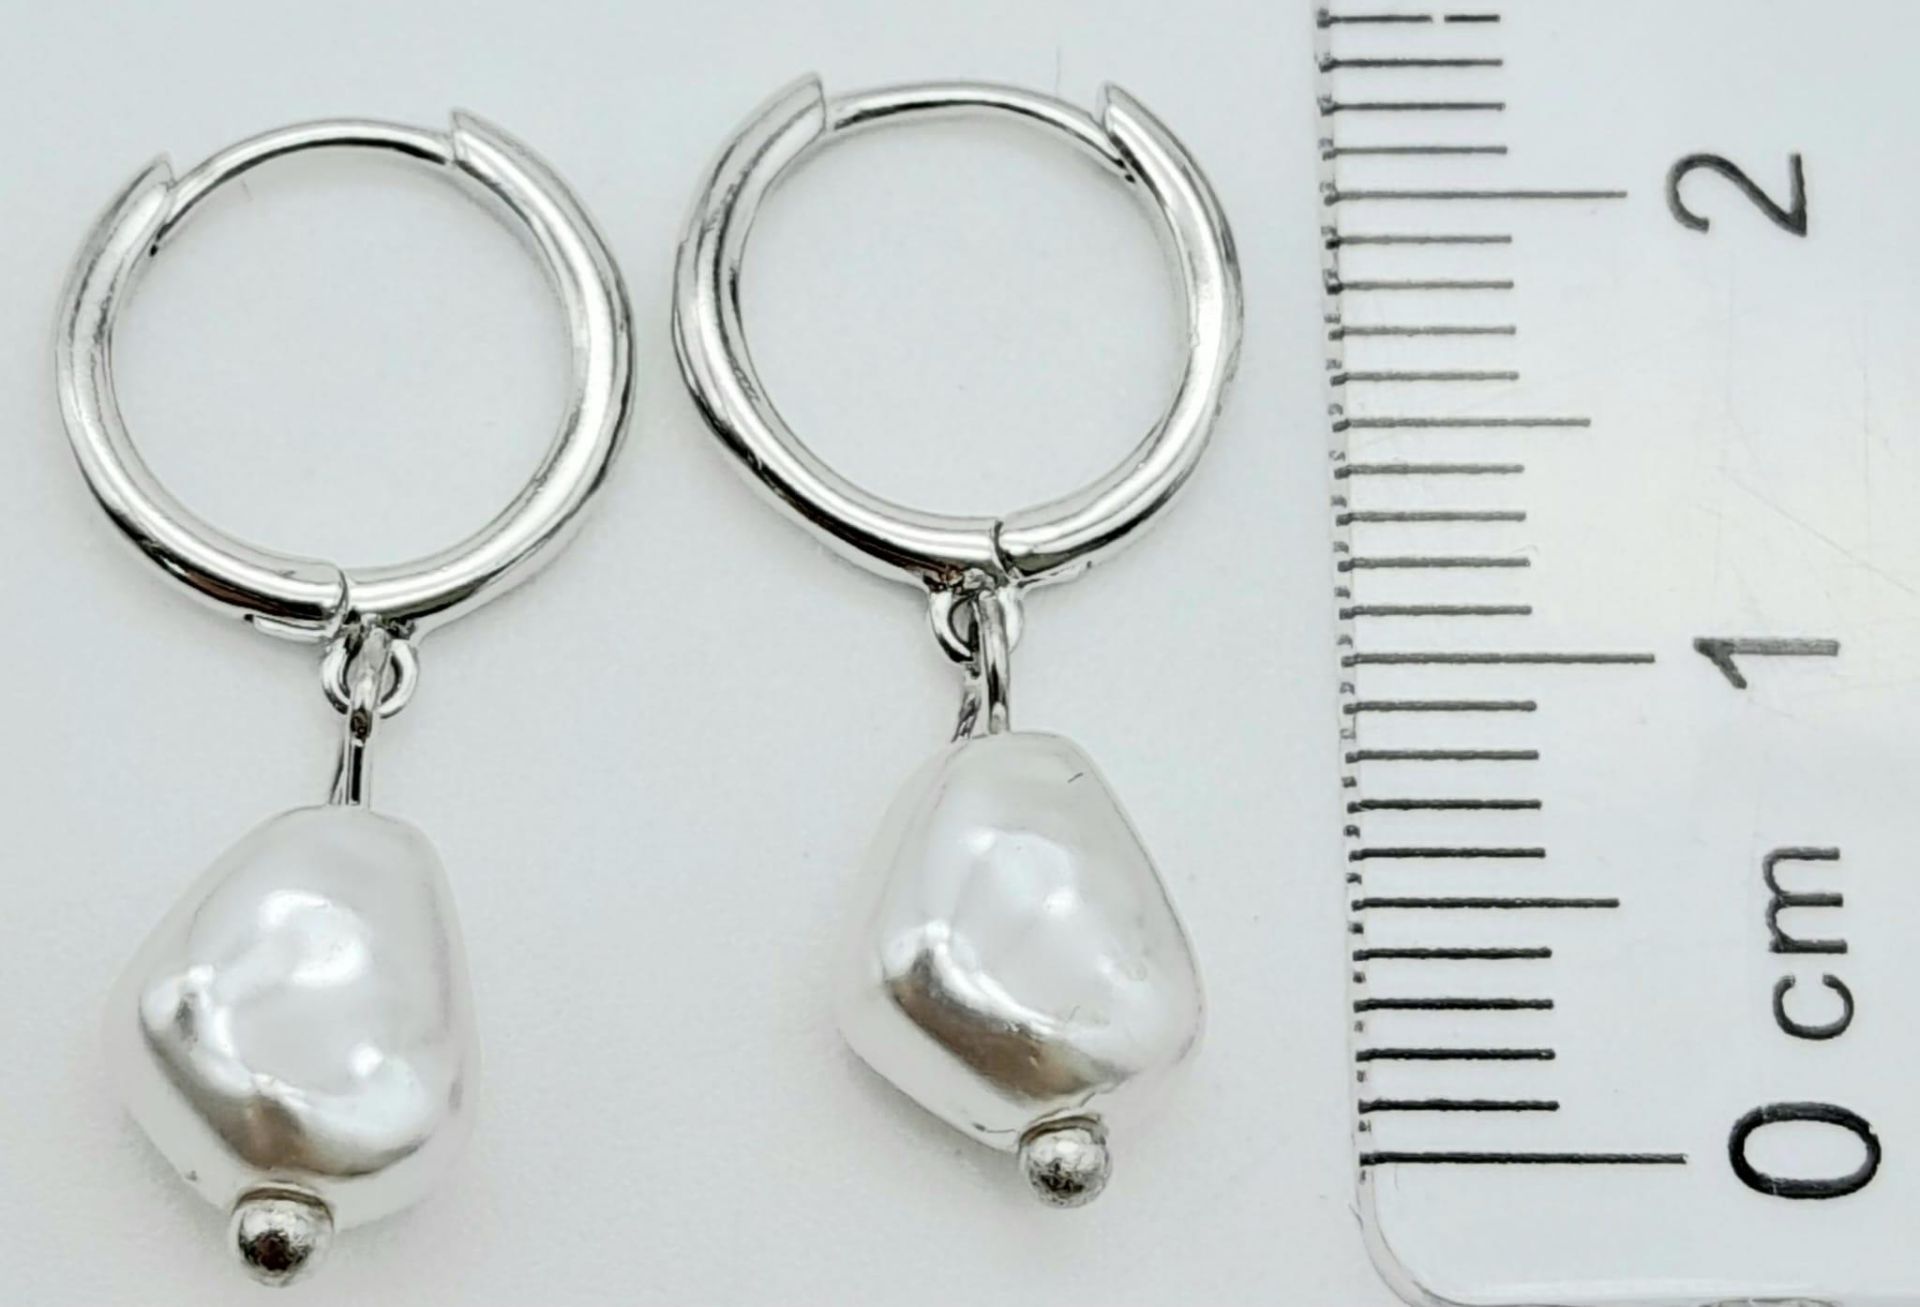 Pair of 925 Silver, Pearl Earrings. Drop measures 1cm. Weight: 1.40g - Image 3 of 4